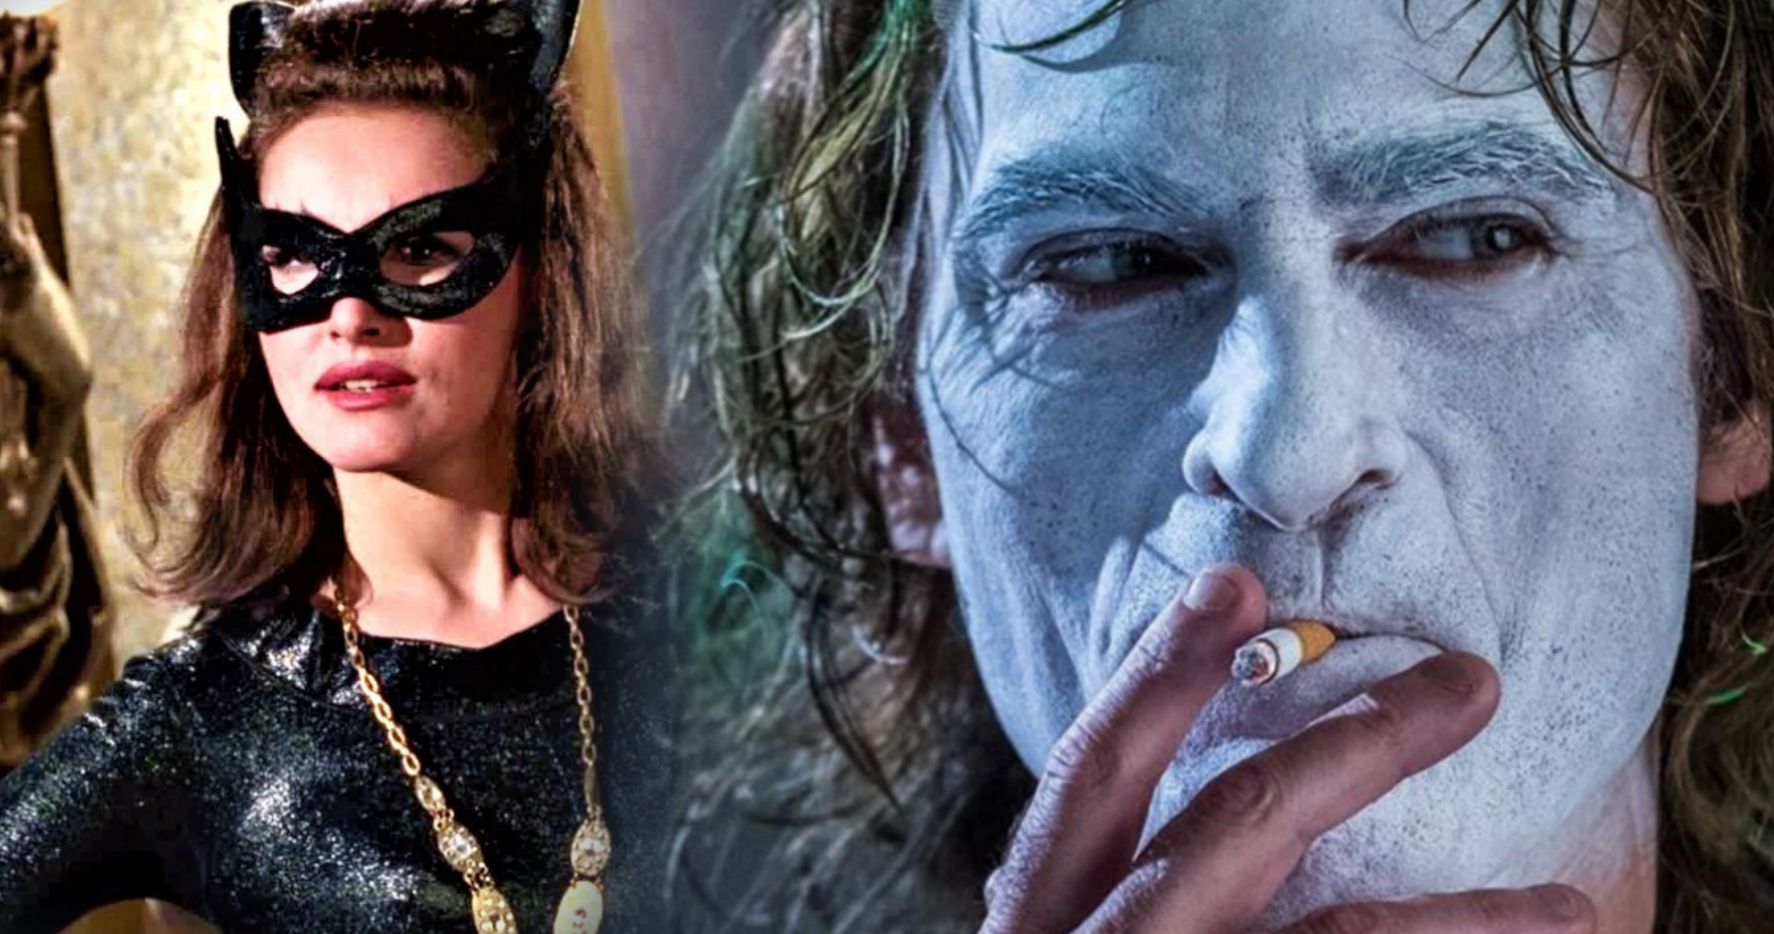 Joker Director Reveals Cut Catwoman Easter Egg in Never-Before-Seen Set Photos